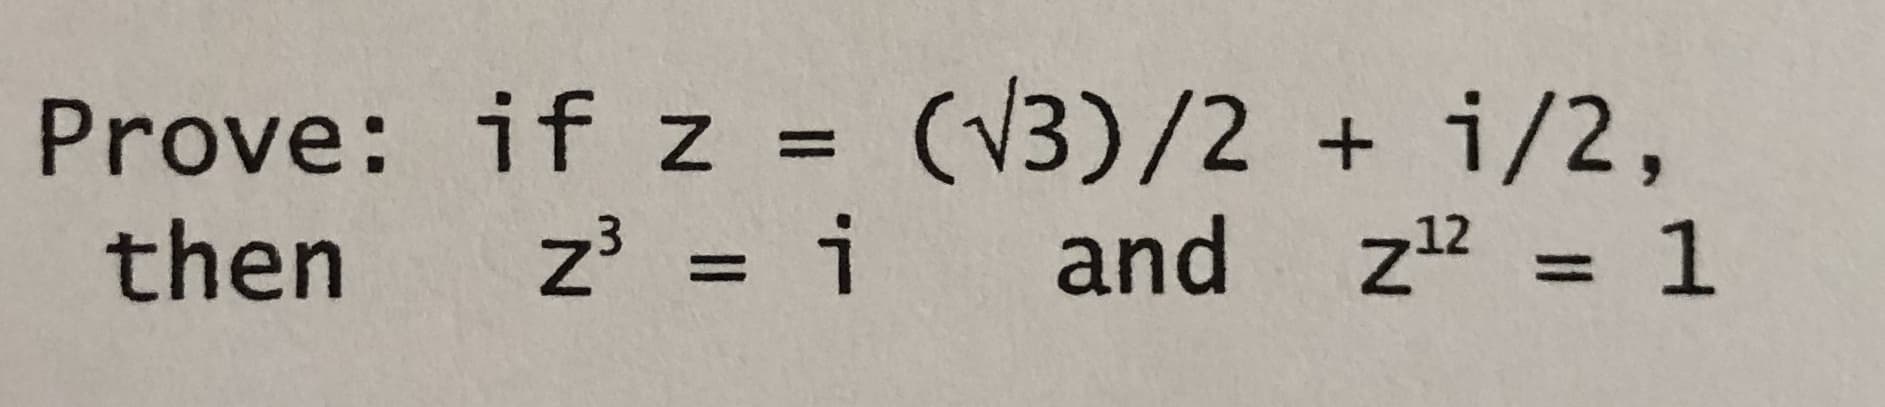 Prove: if z = (V3)/2 + i/2,
and
%3D
then
z = i
z" = 1
%3D
